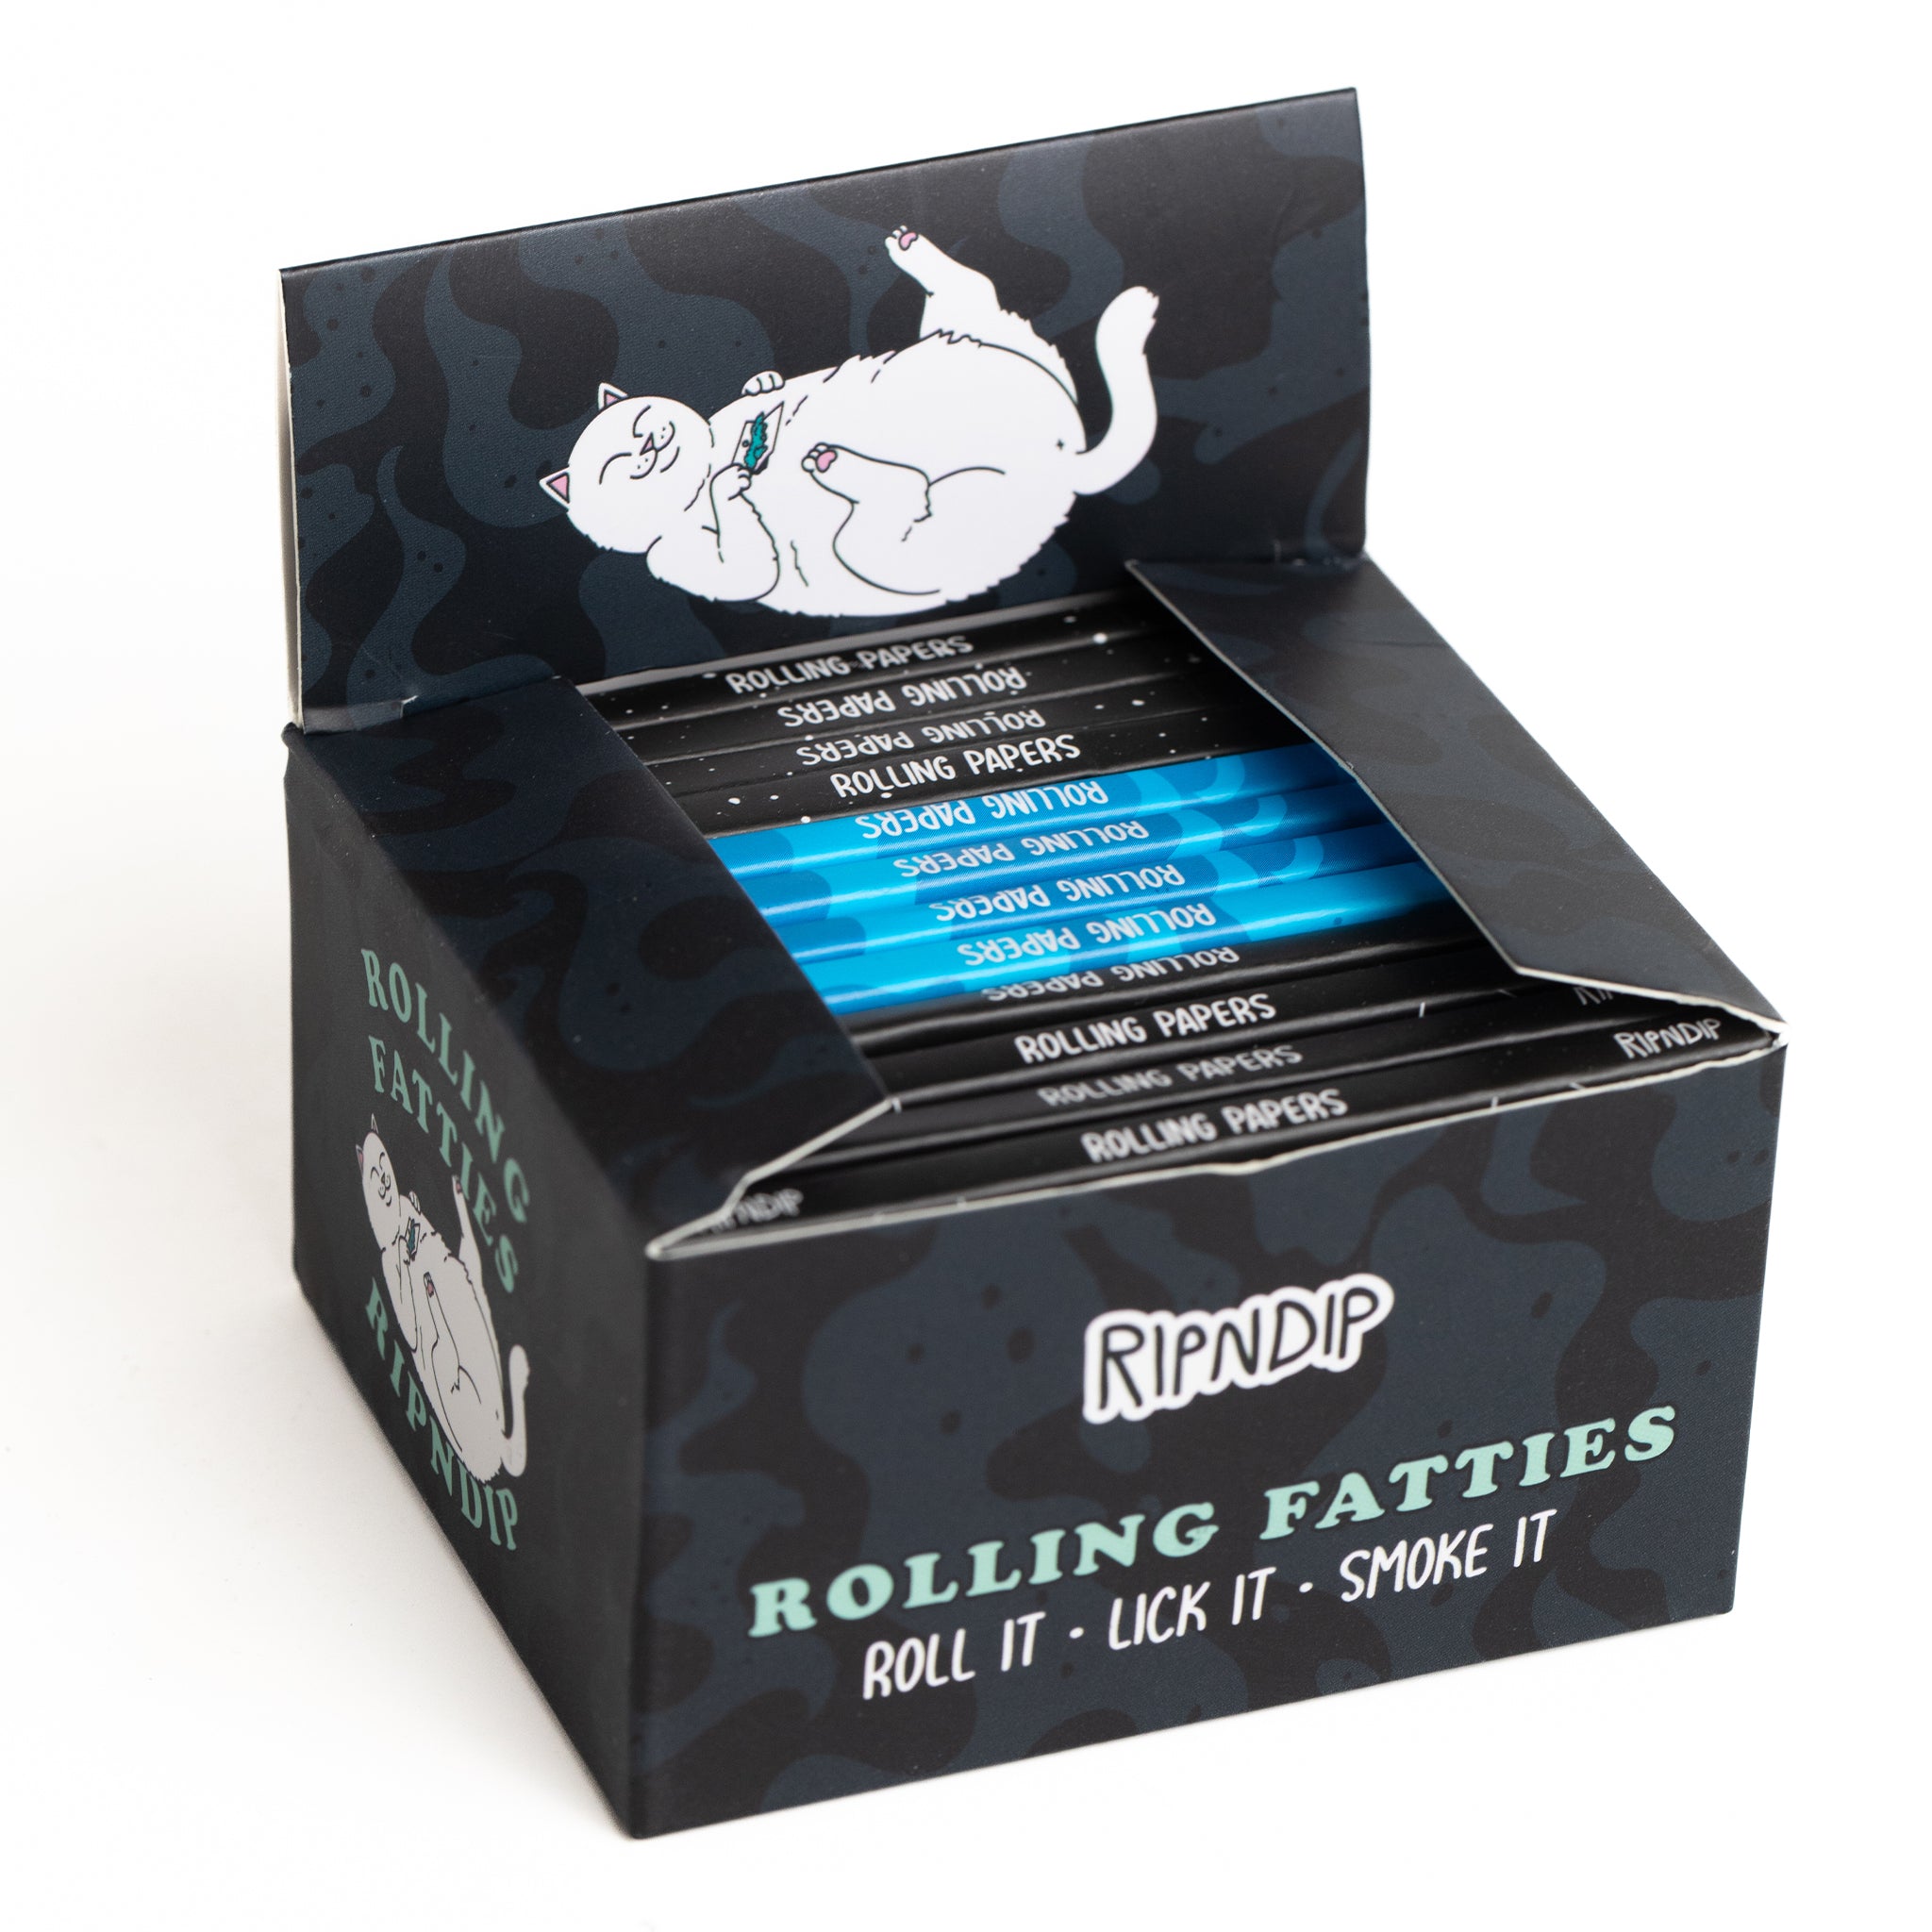 RIPNDIP Rolling Fatties Rolling Papers Set (White)